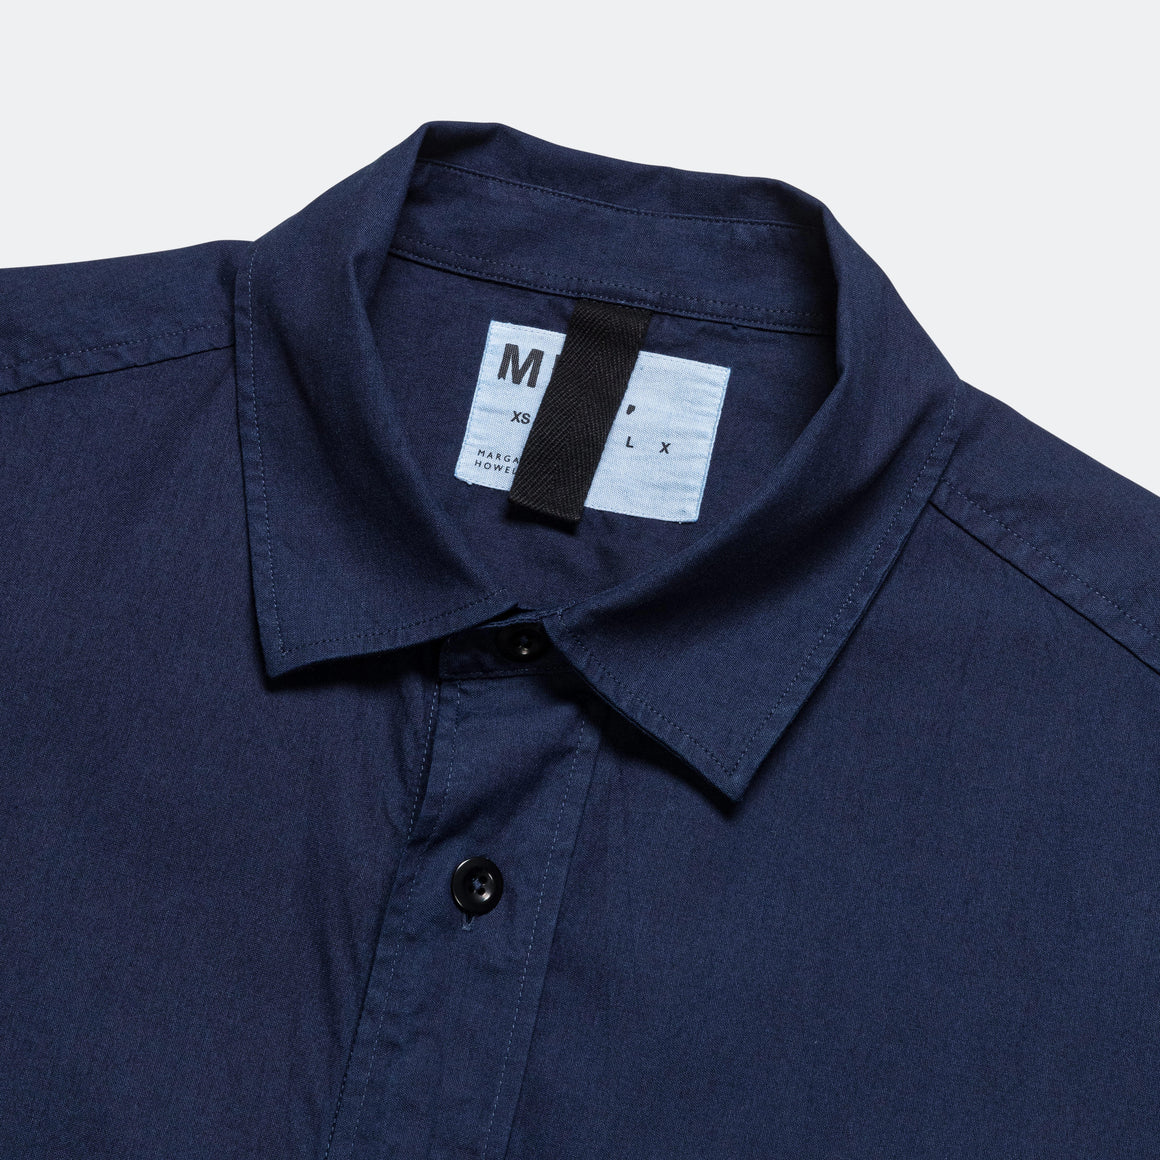 Overall Shirt - Indigo Cotton Plainweave